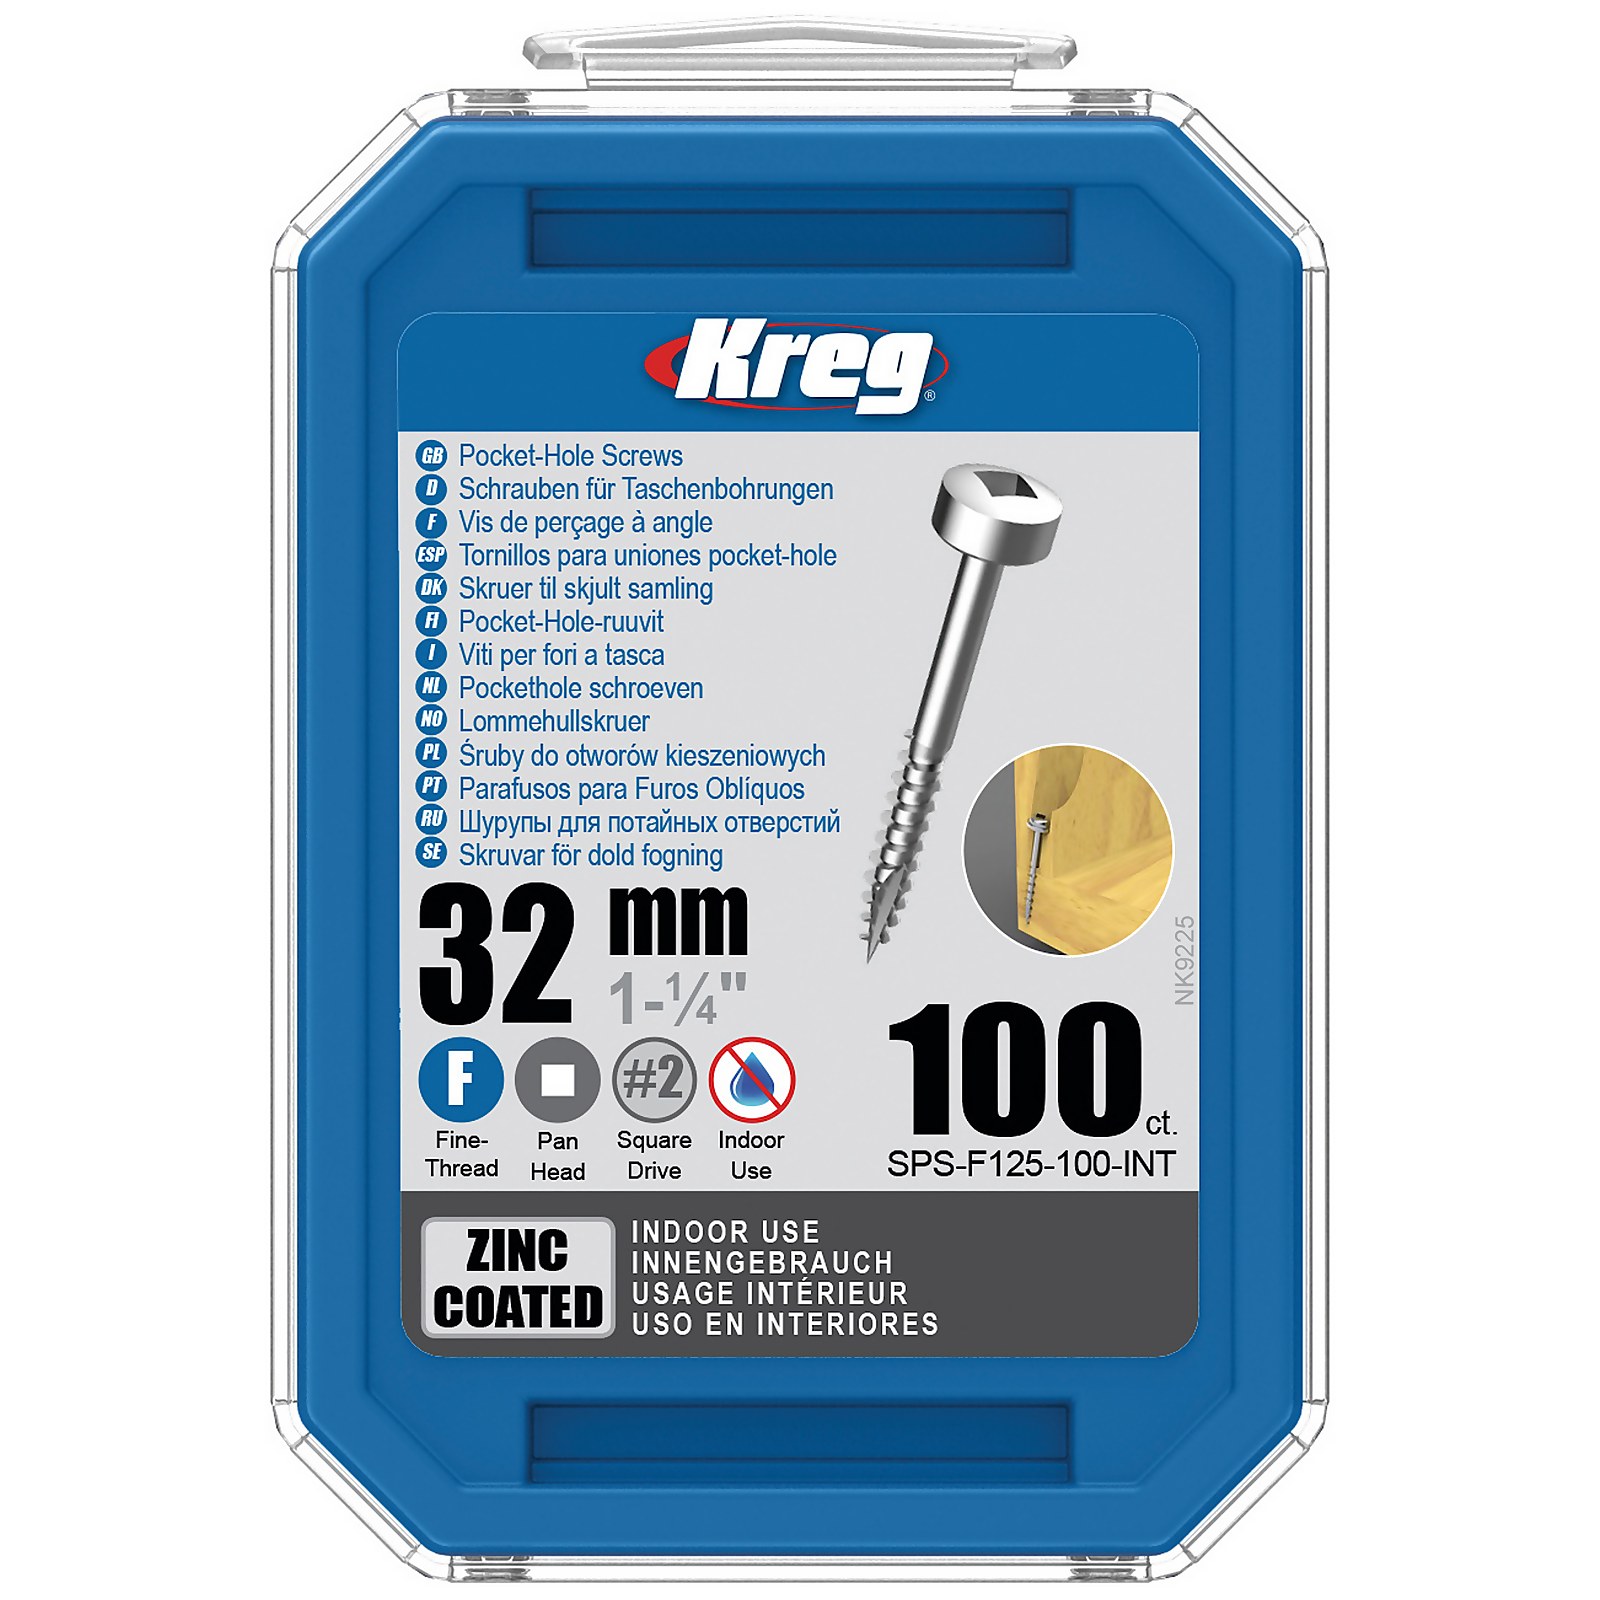 Photo of Kreg Sps-f125-100-eur Zinc Pocket-hole Screws - 32mm / 1.25 - #6 Fine-thread- Pan Head - 100 Pack